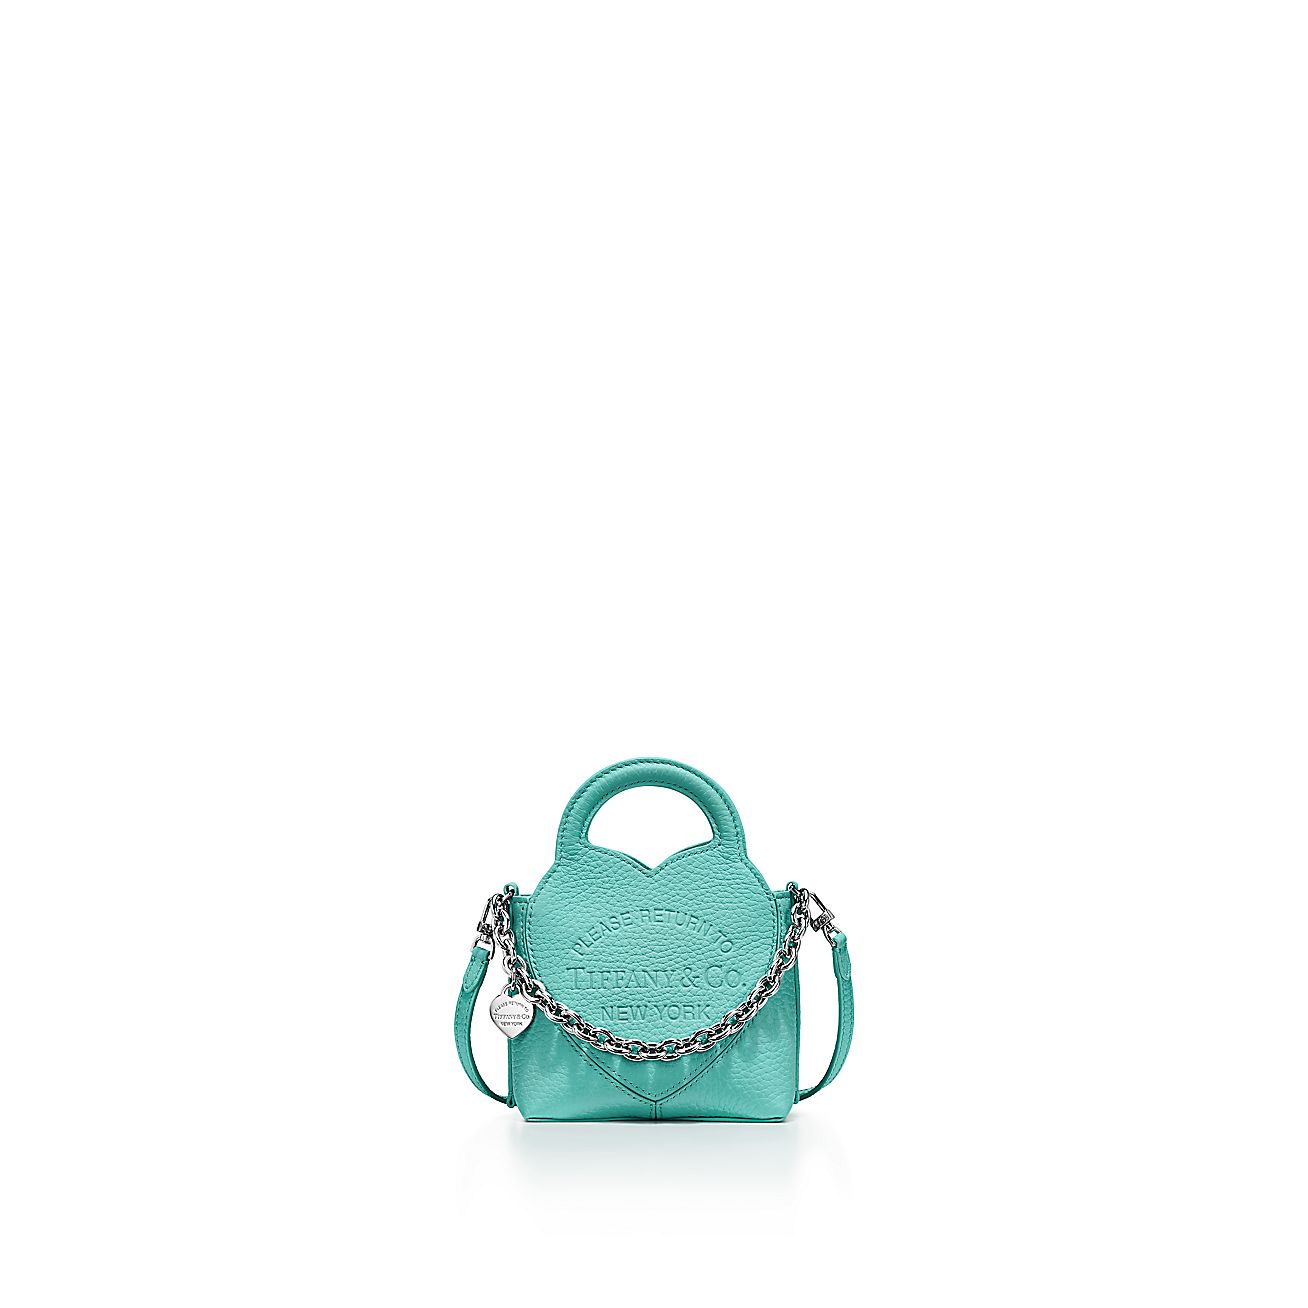 Return to Tiffany® Micro Tote Bag